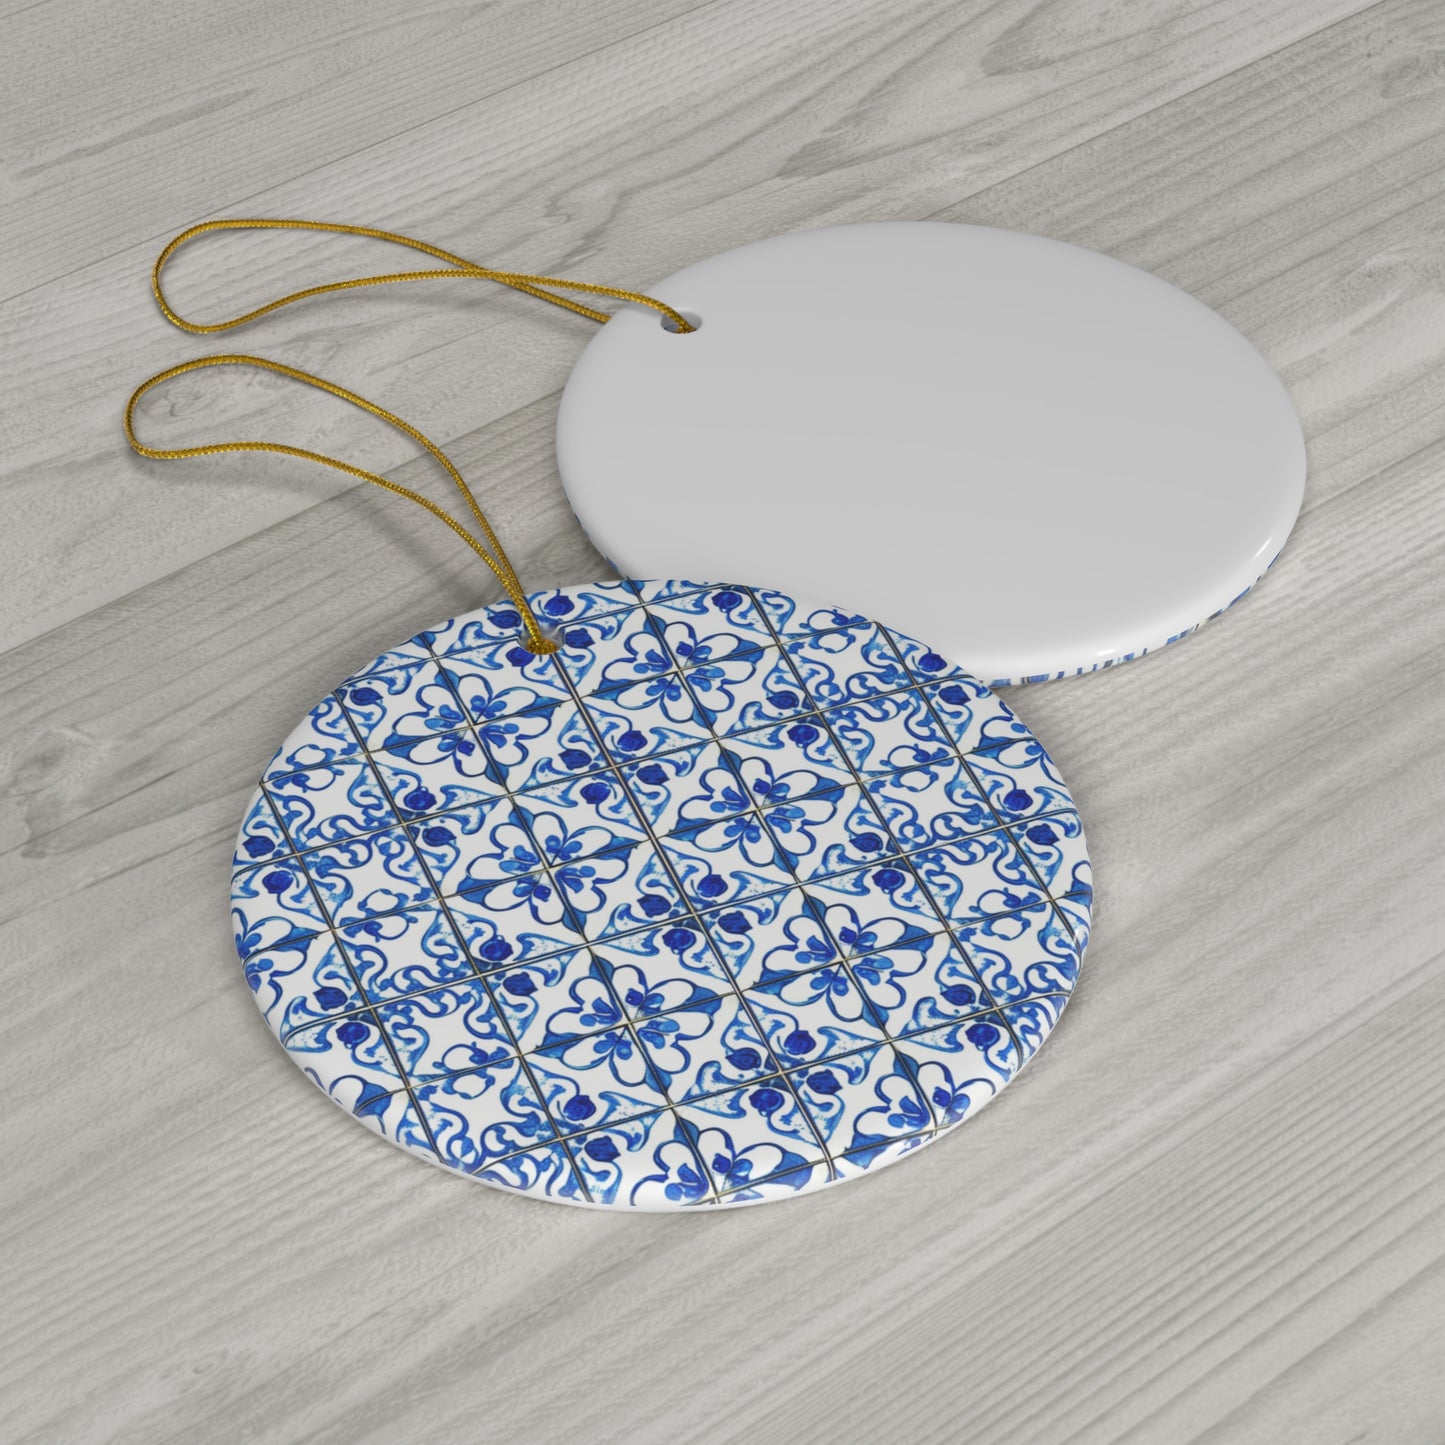 Amsterdam Cafe Blue and White Tile Decorative Ceramic Ornament